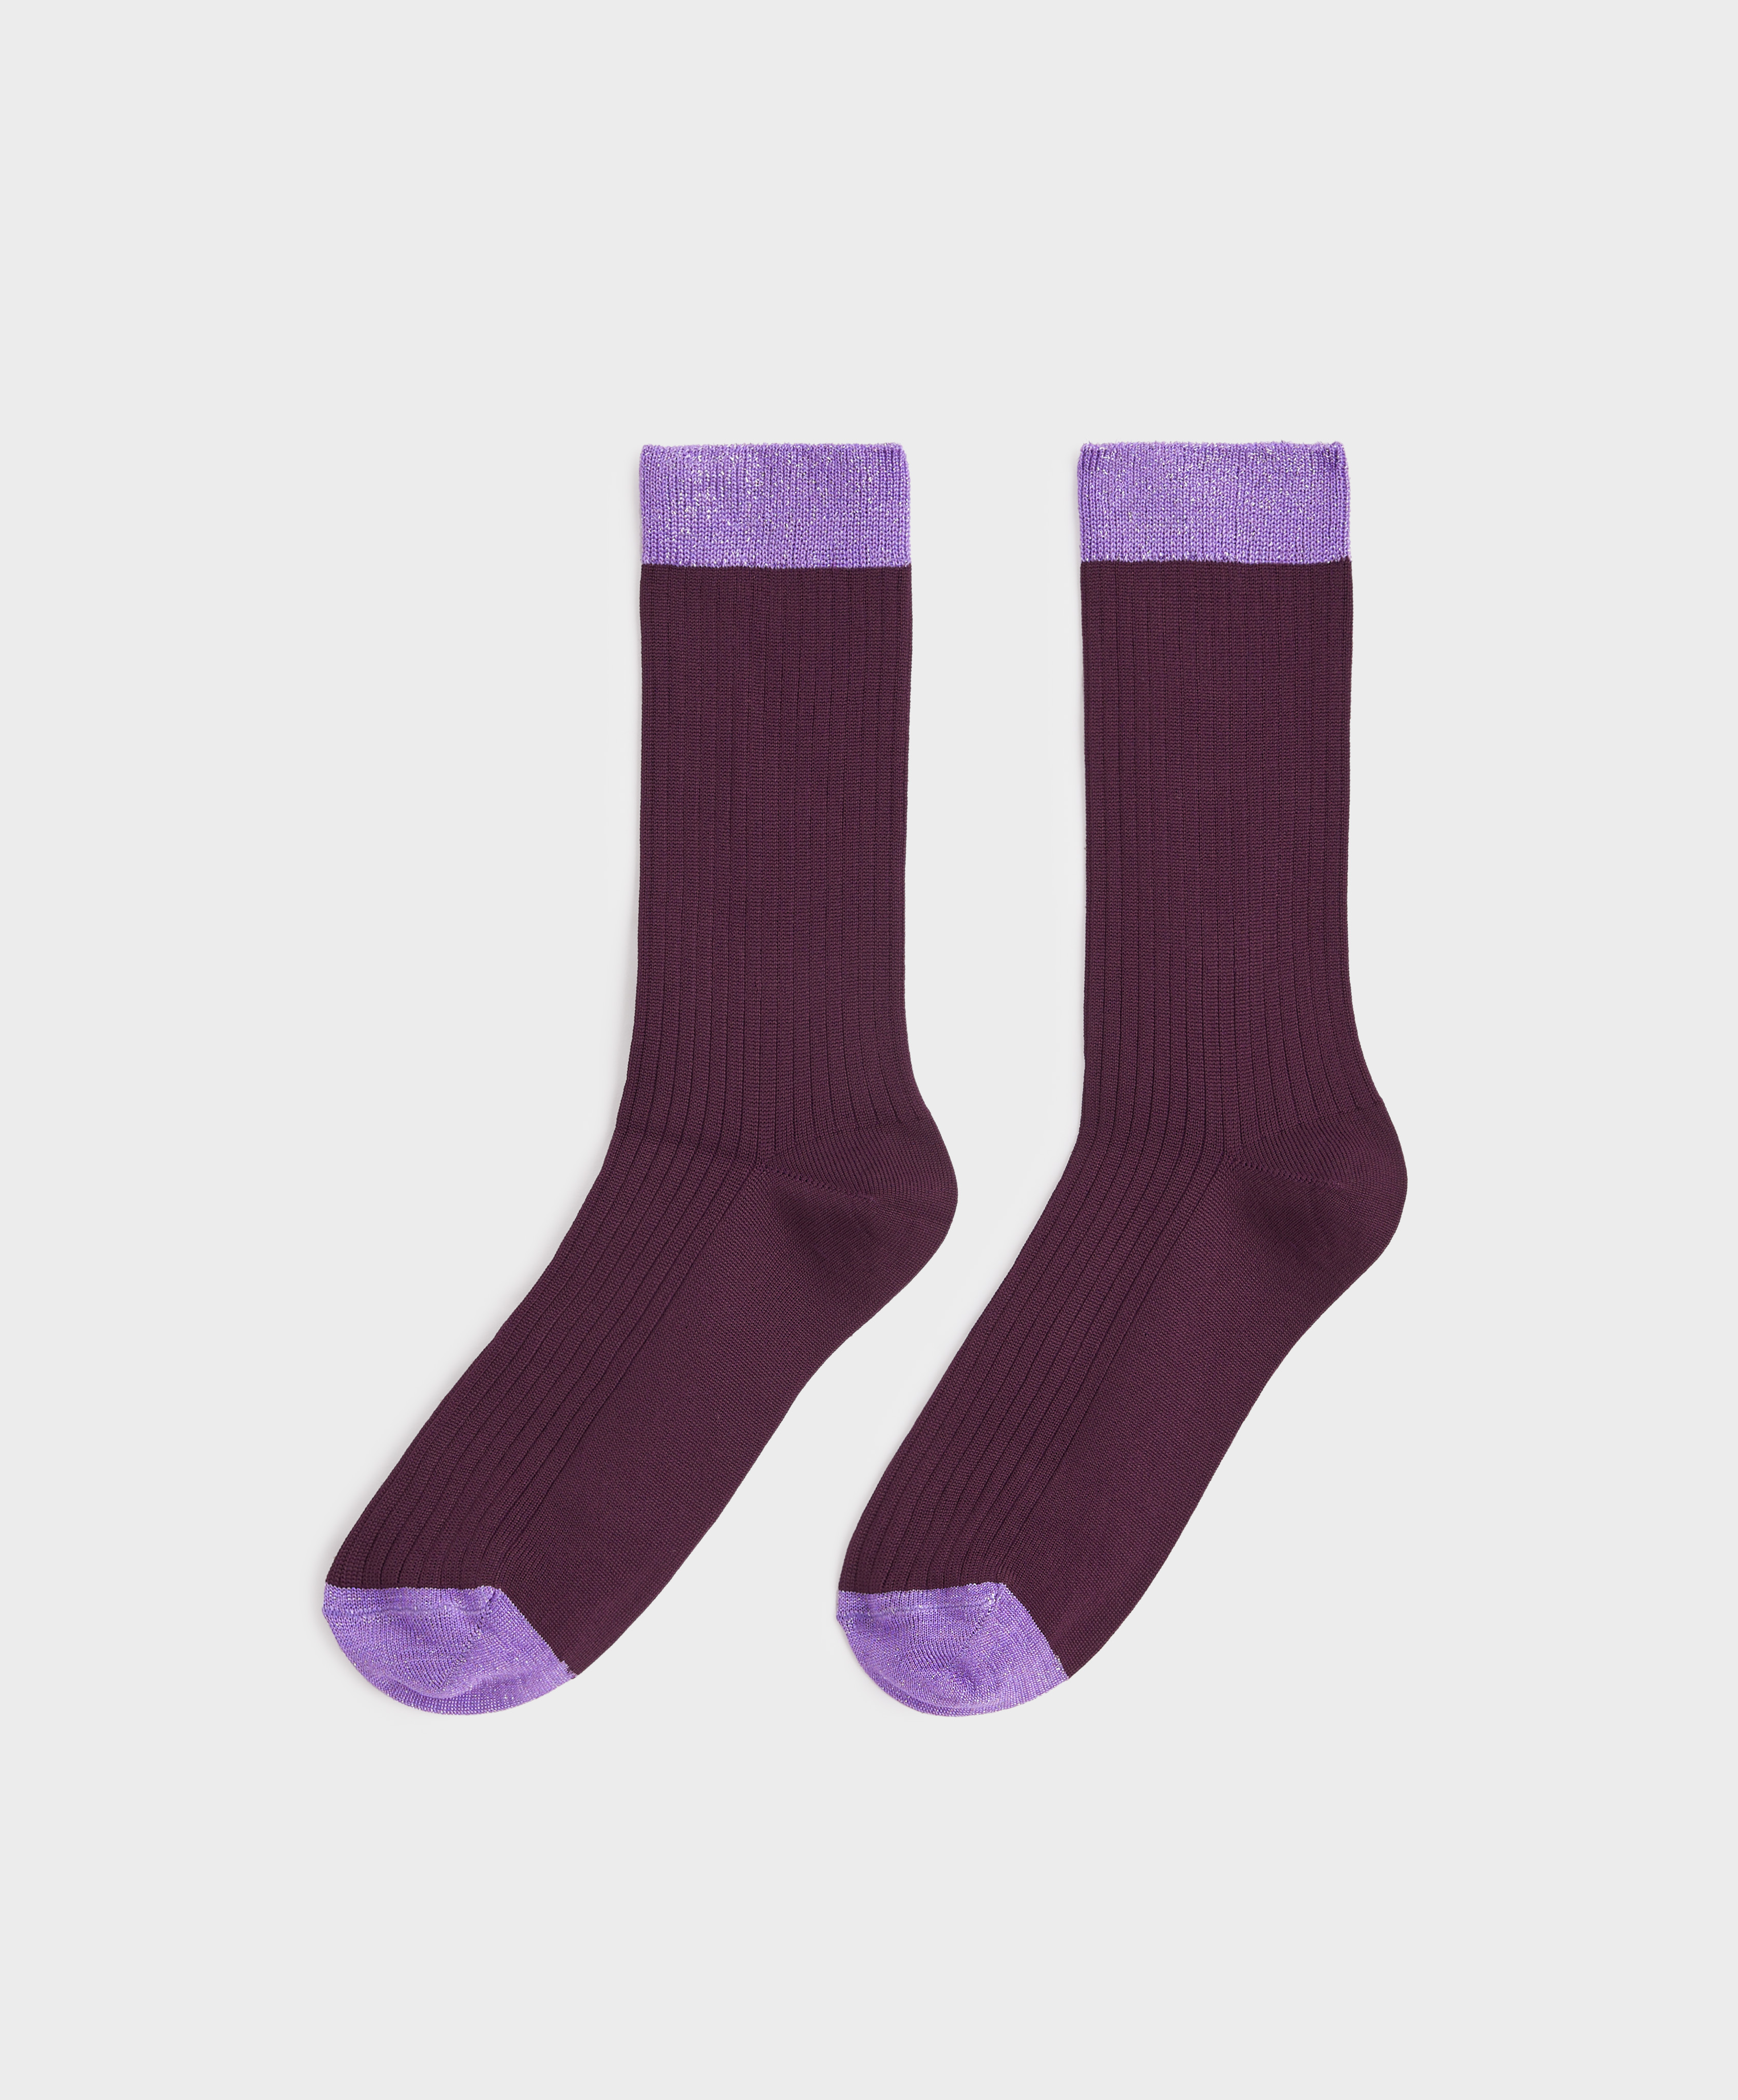 Classic-Socken aus Viskose